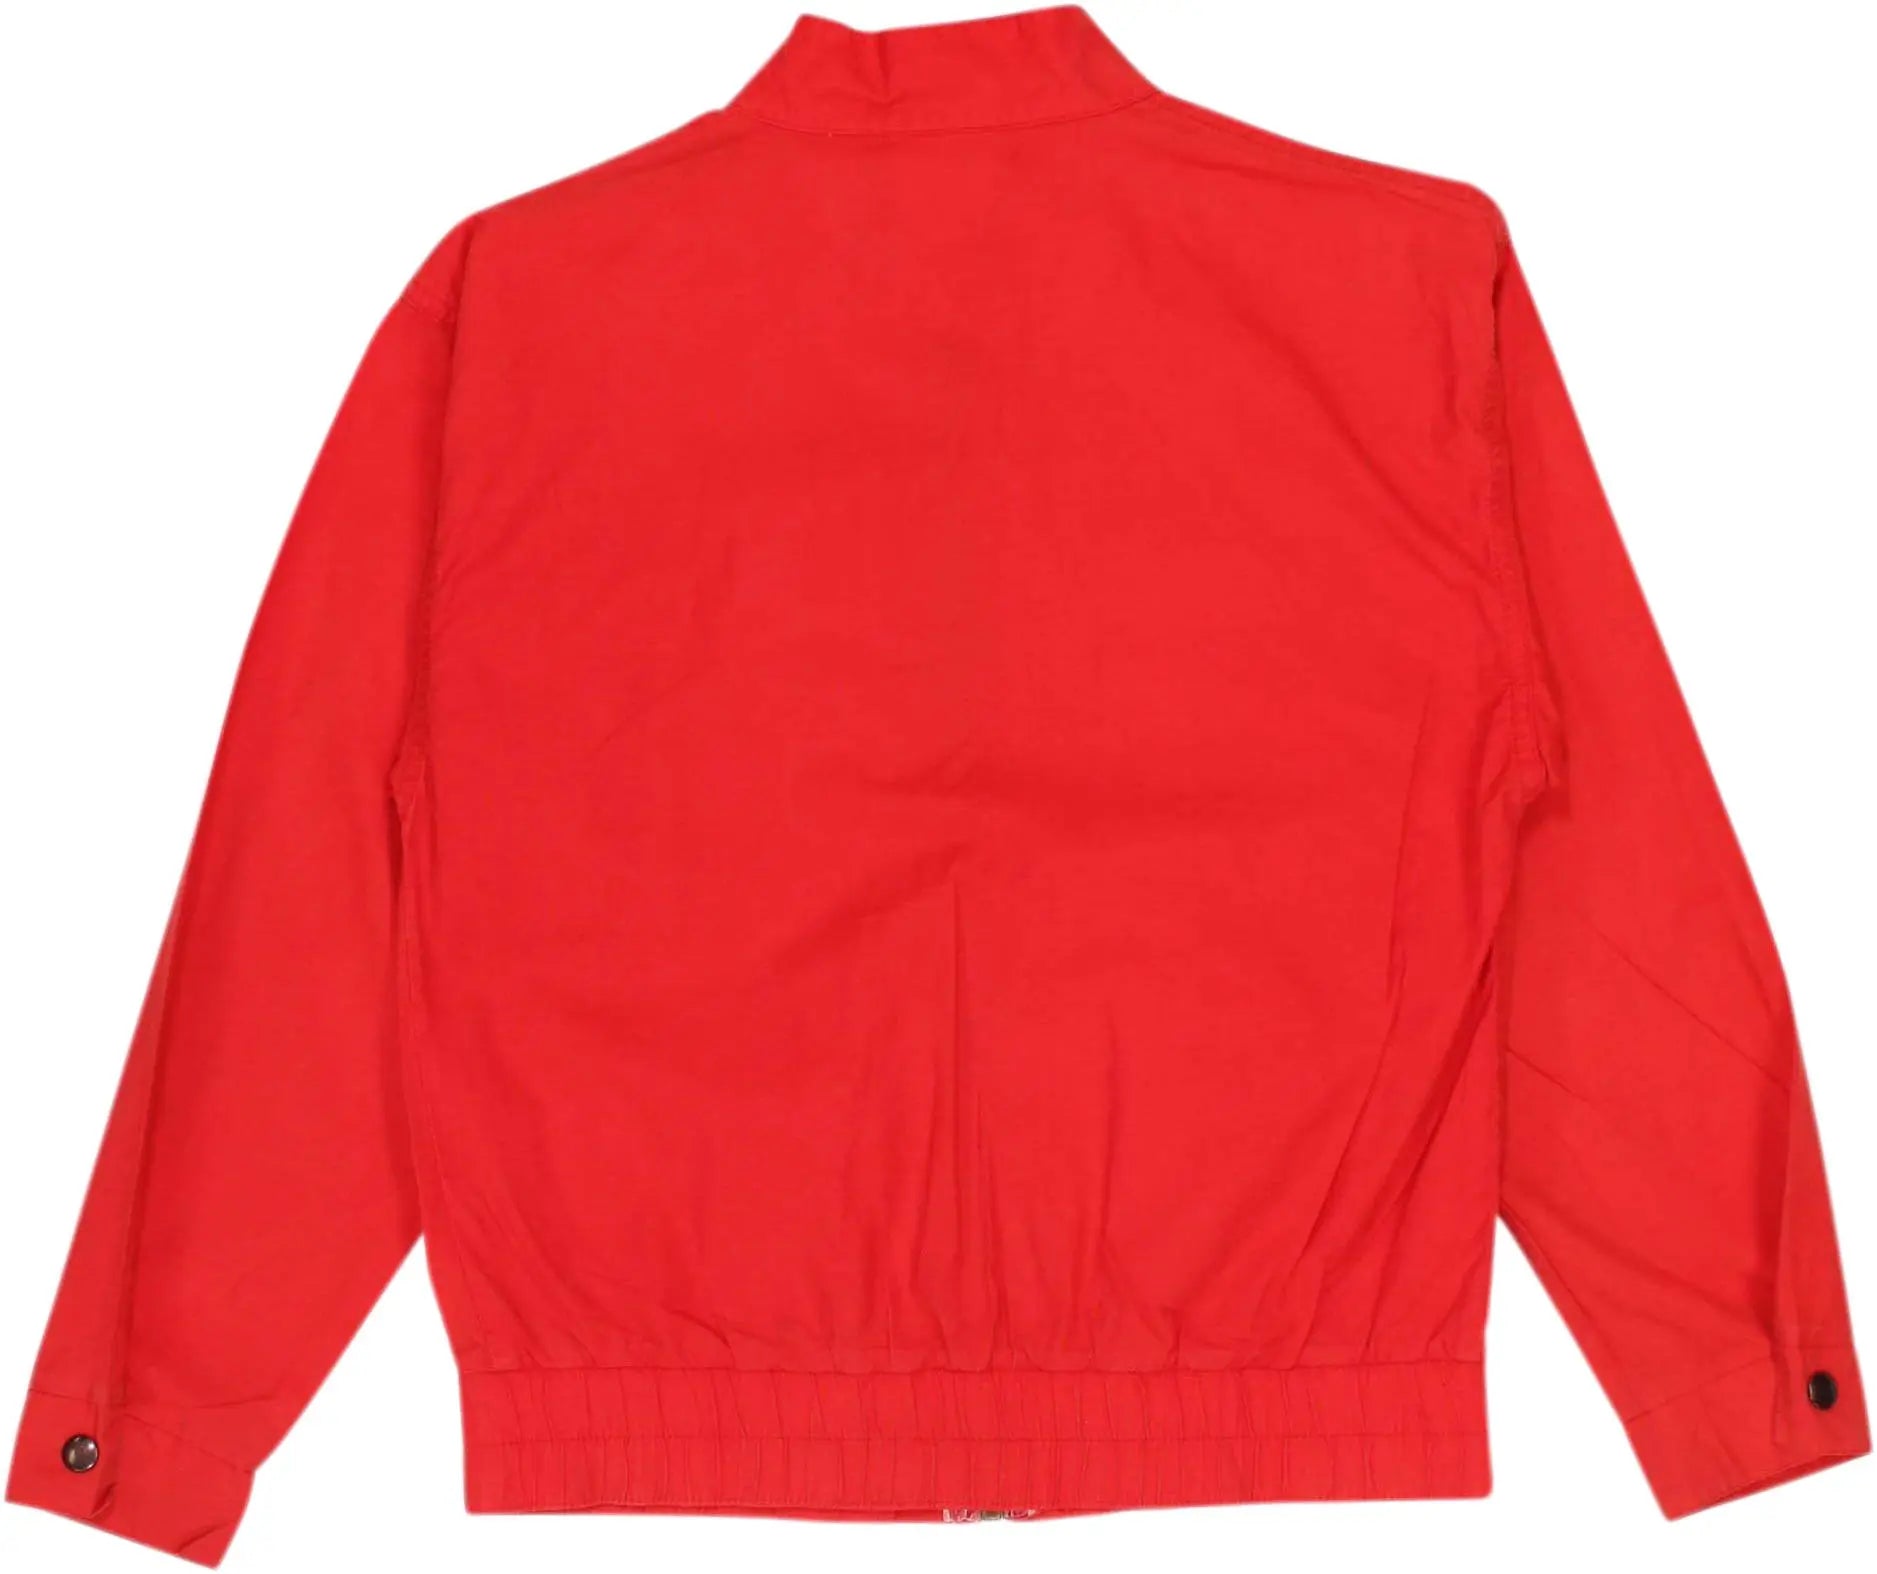 Benna Brok - Red Jacket- ThriftTale.com - Vintage and second handclothing